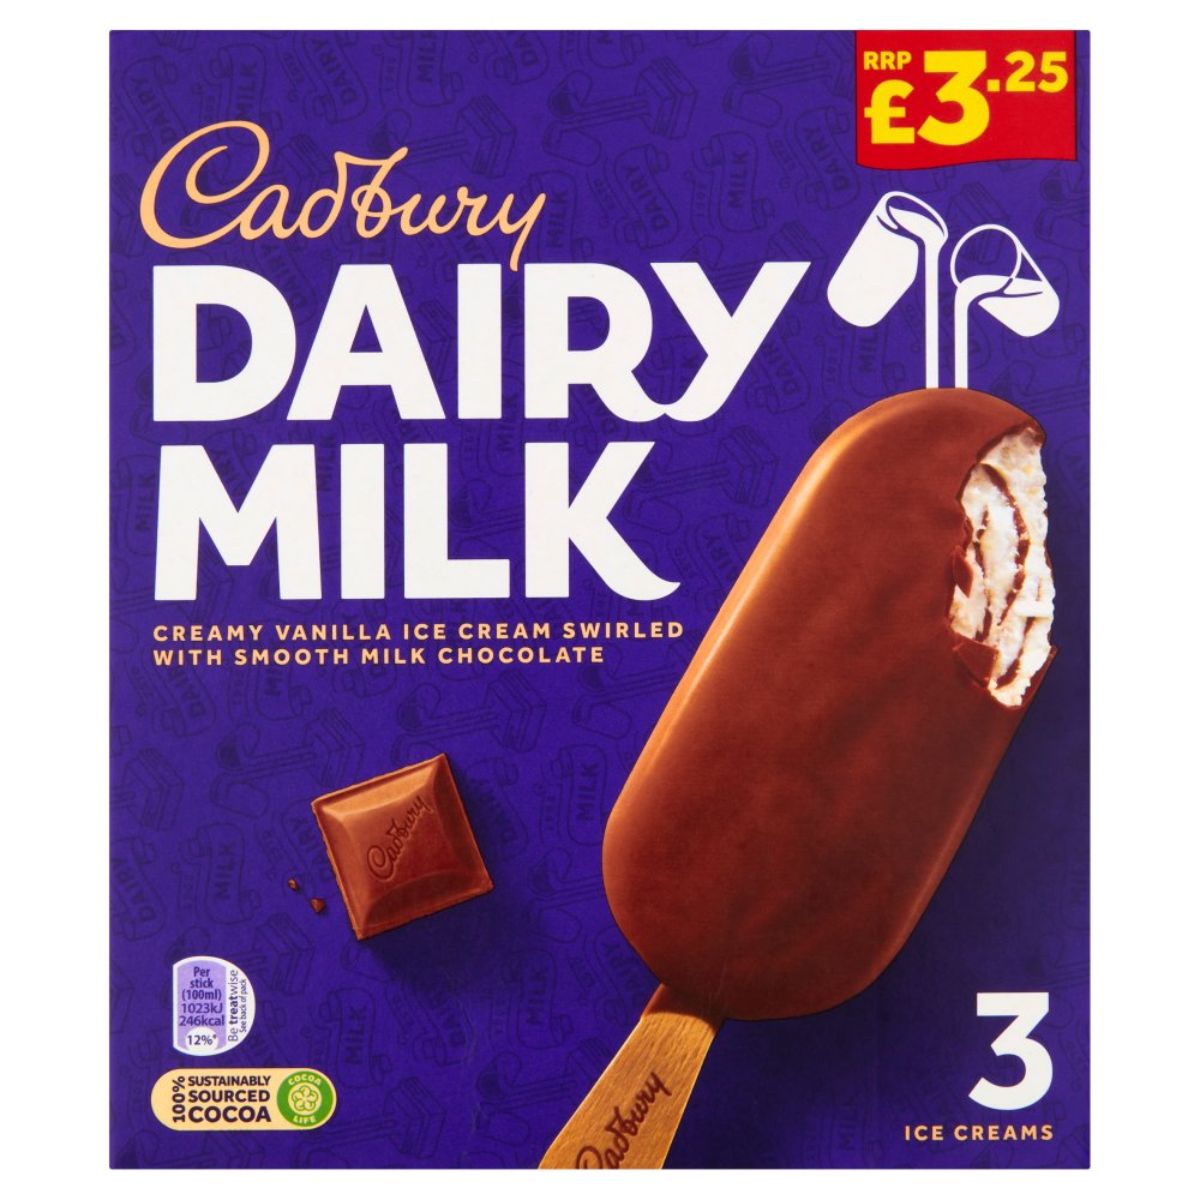 Cadbury - Dairy Milk - 300ml ice cream.